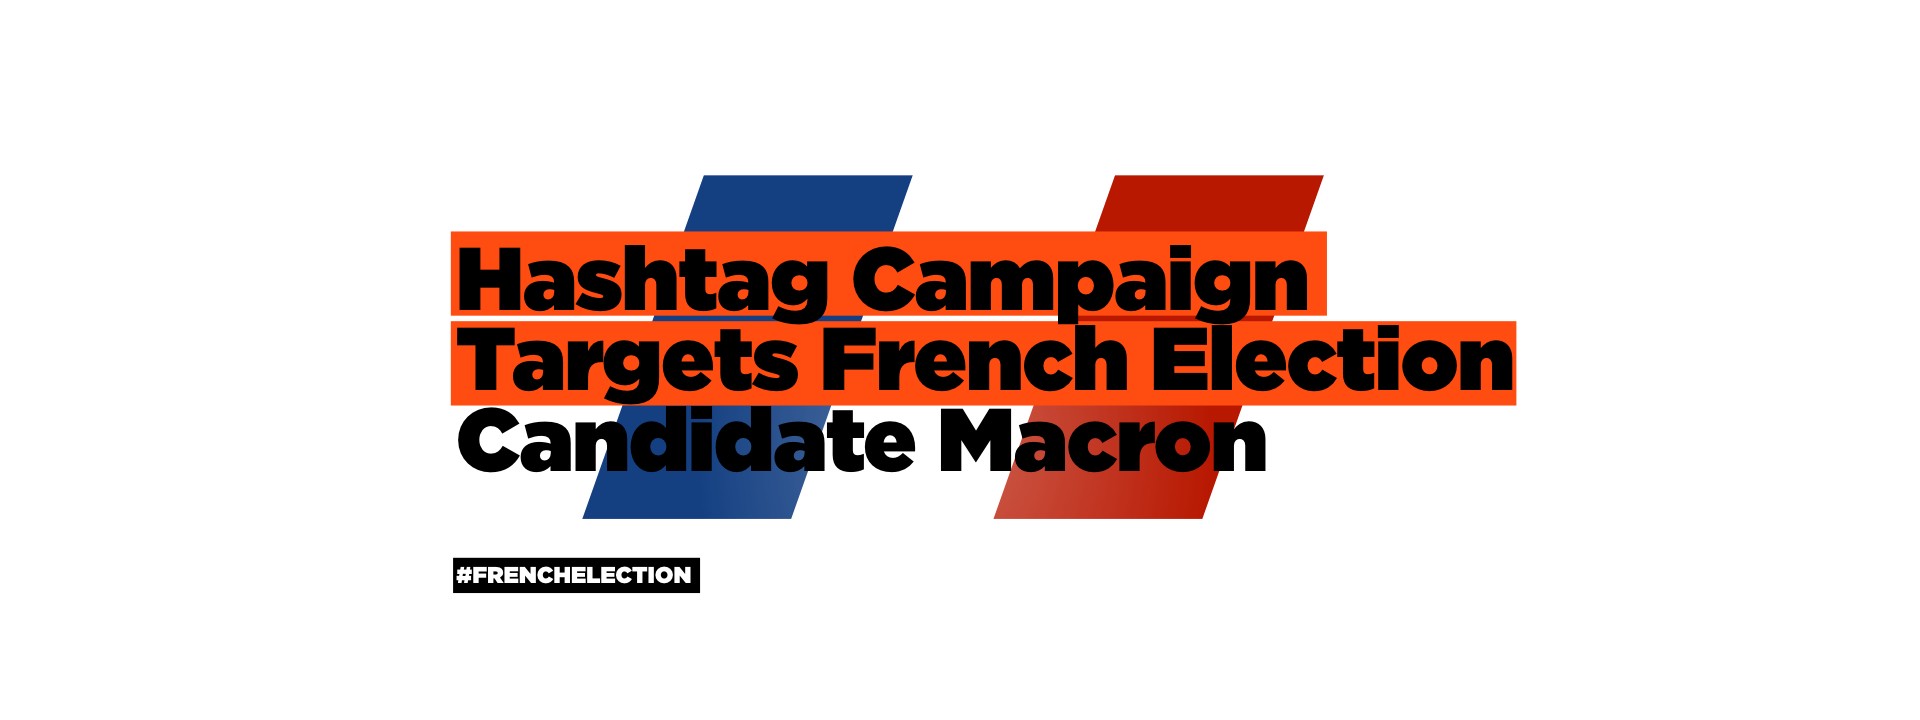 Hashtag Campaign: #MacronLeaks